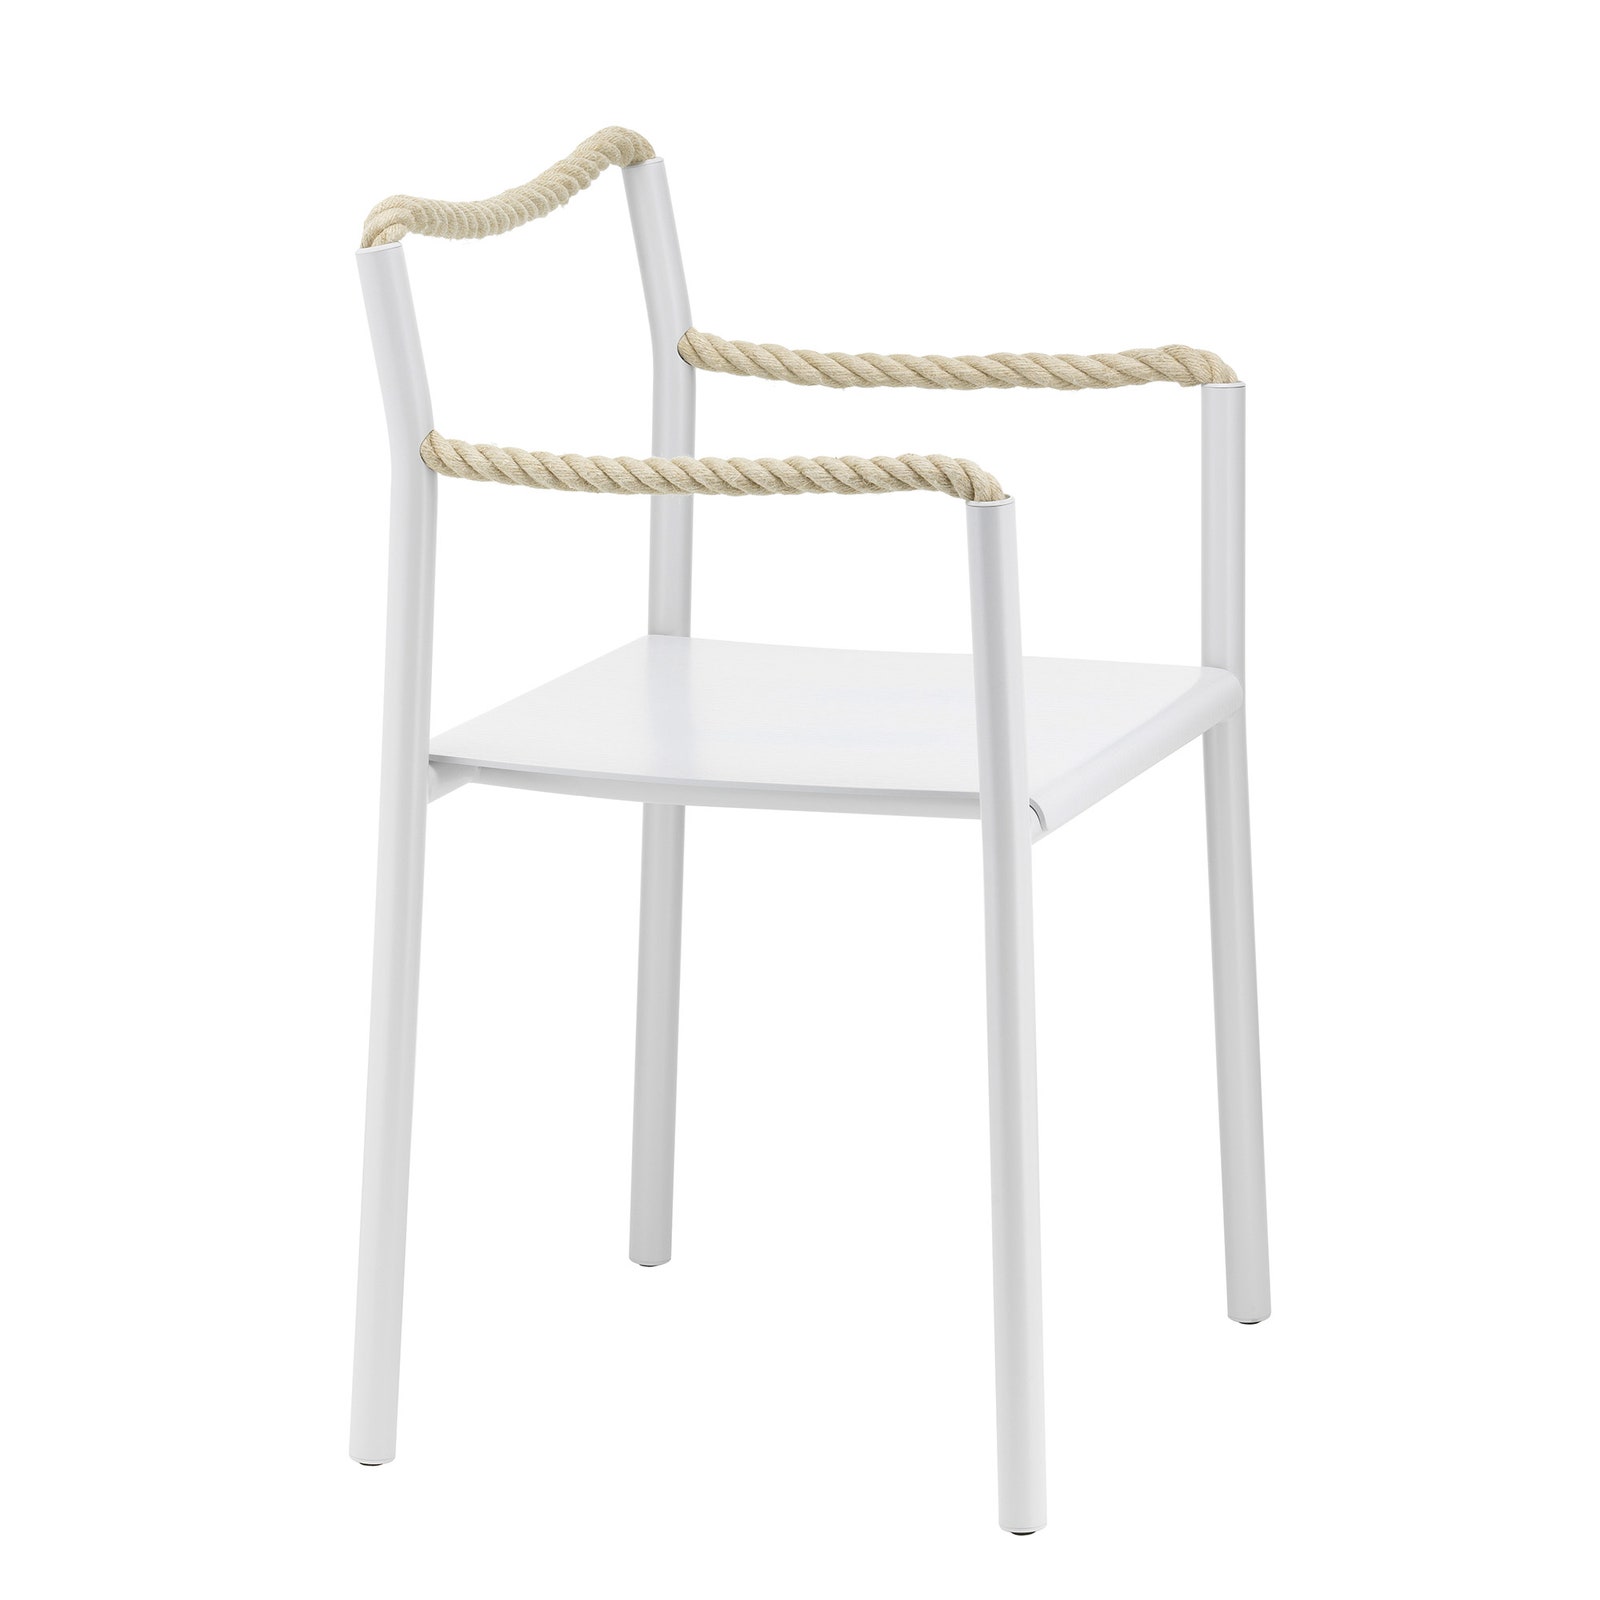 Новинки Artek стул Rope Chair по дизайну братьев Буруллек